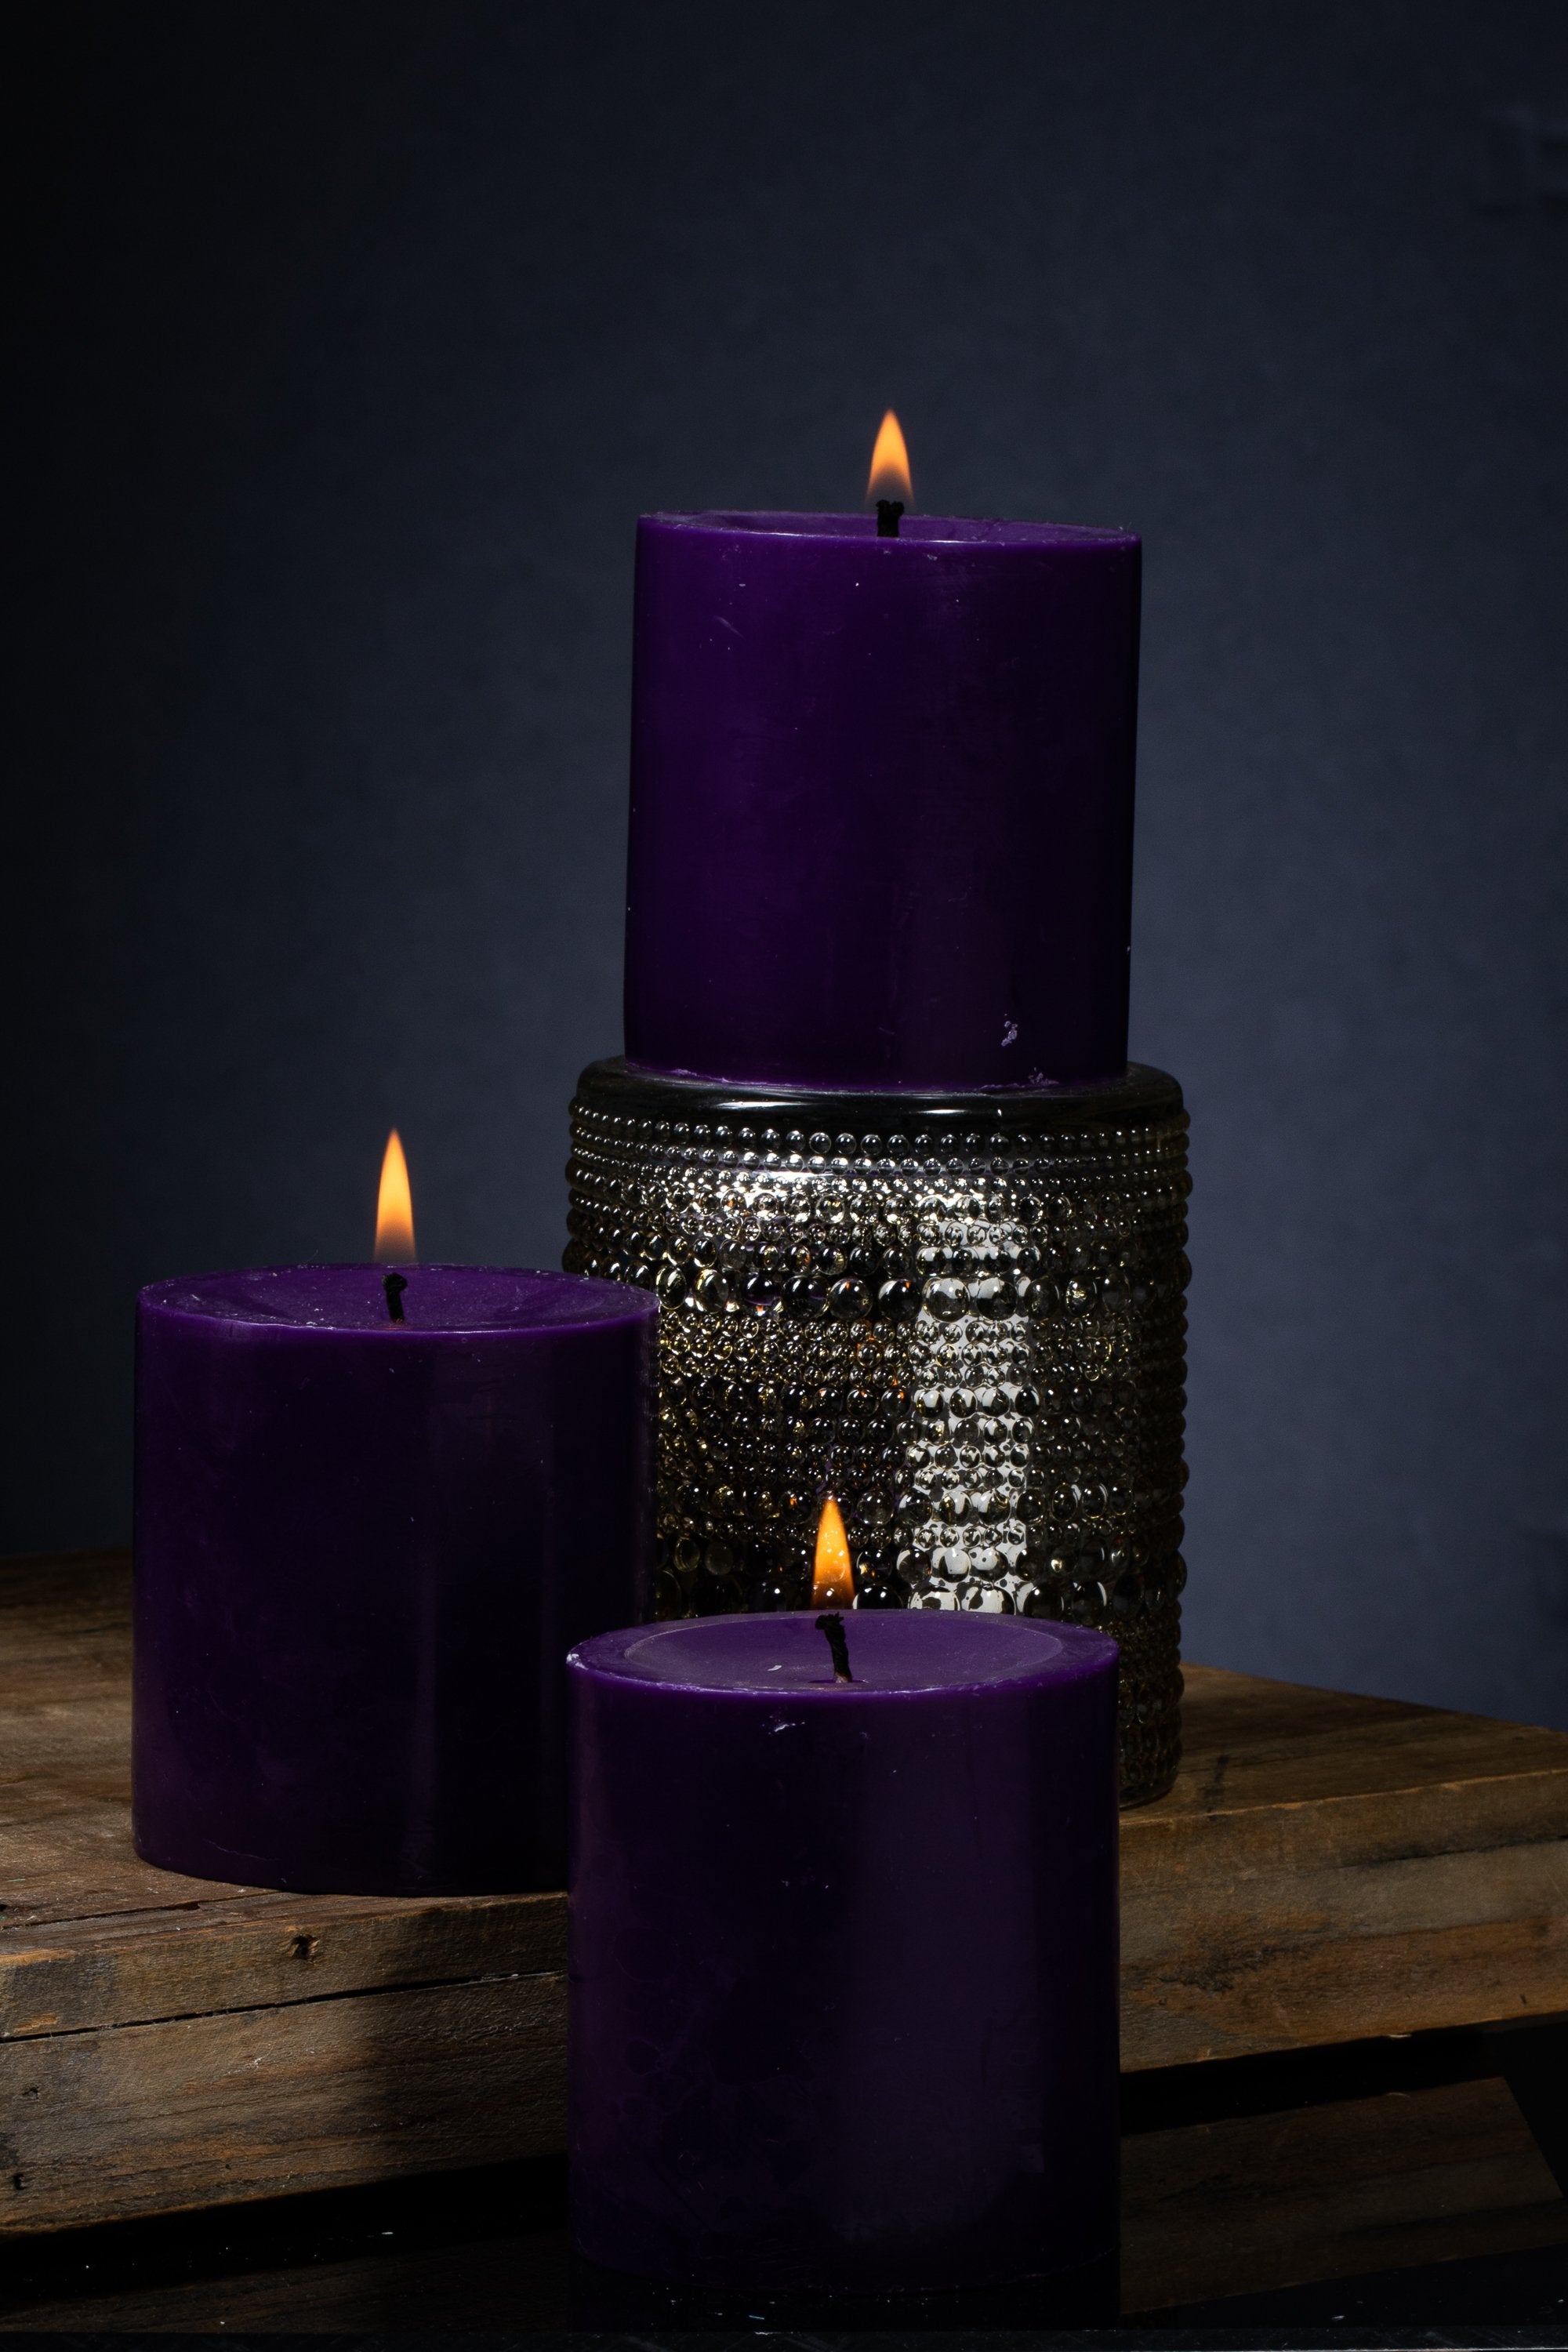 Richland Pillar Candles 3"x3" Purple Set of 48